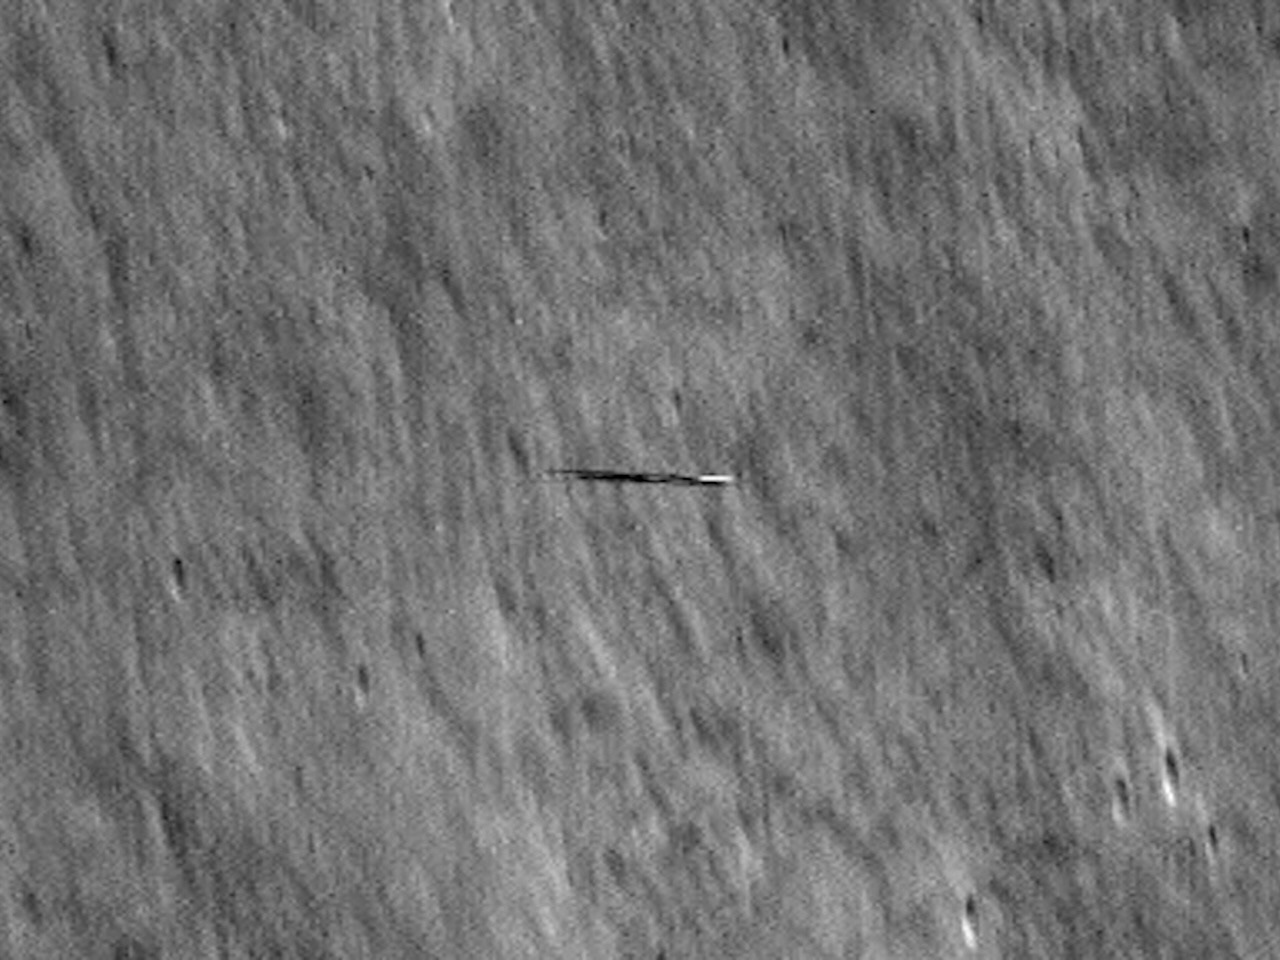 NASA周回衛星、月で韓国の探査機を撮影--10倍の大きさに伸びてしまった納得の理由